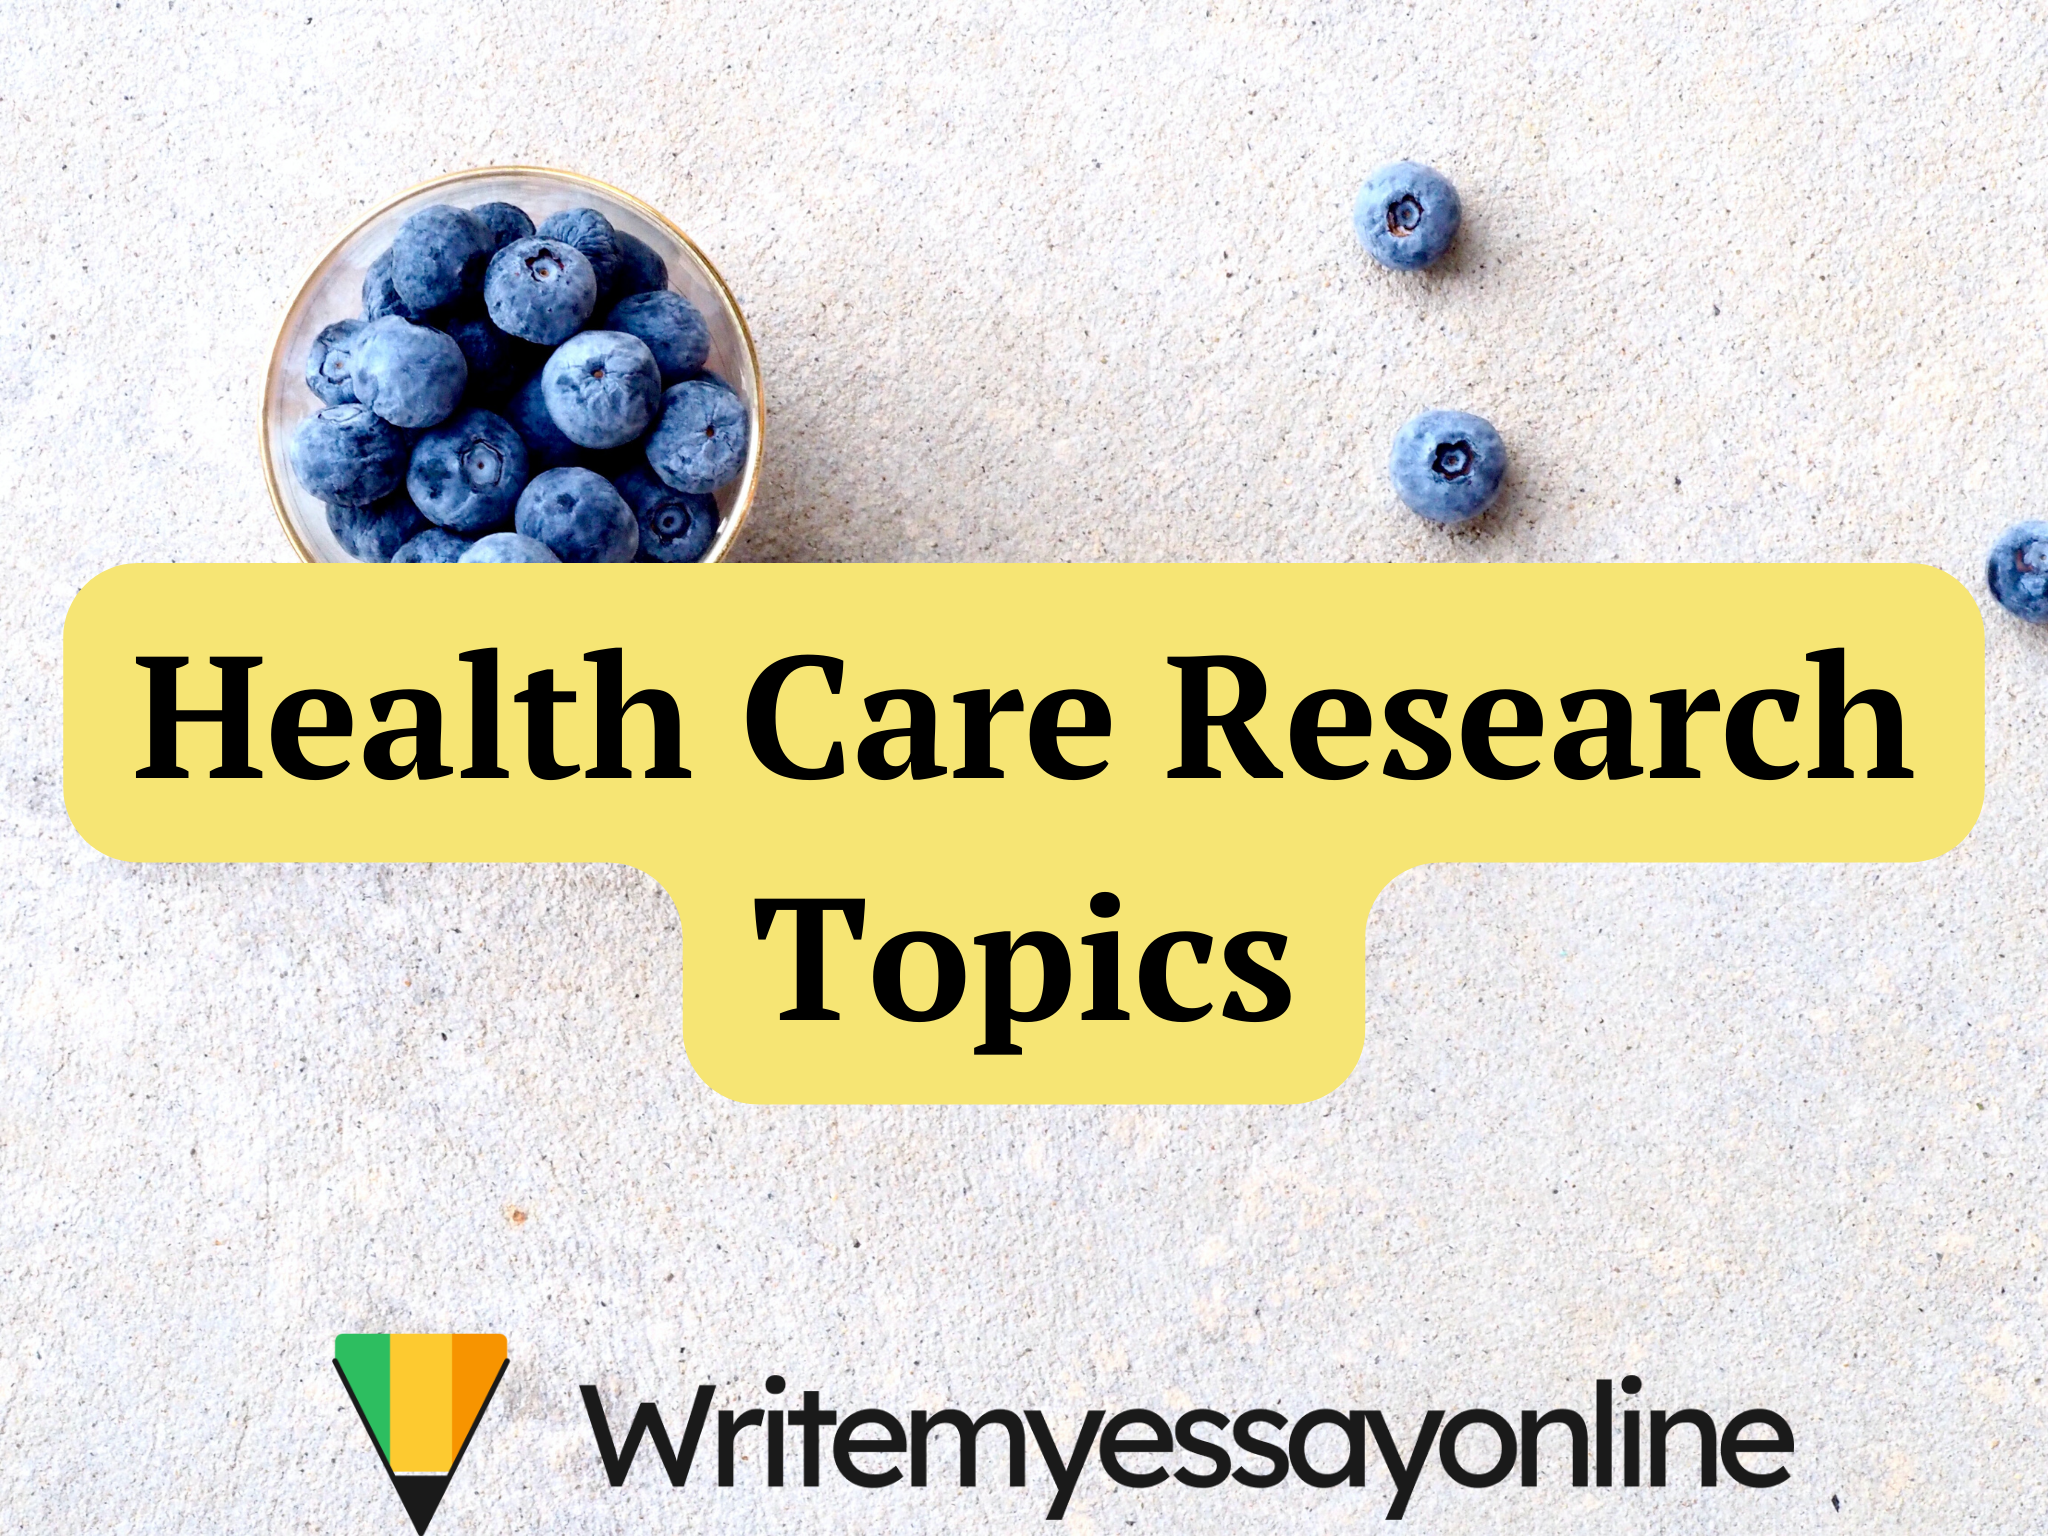 Health Care Research Topics